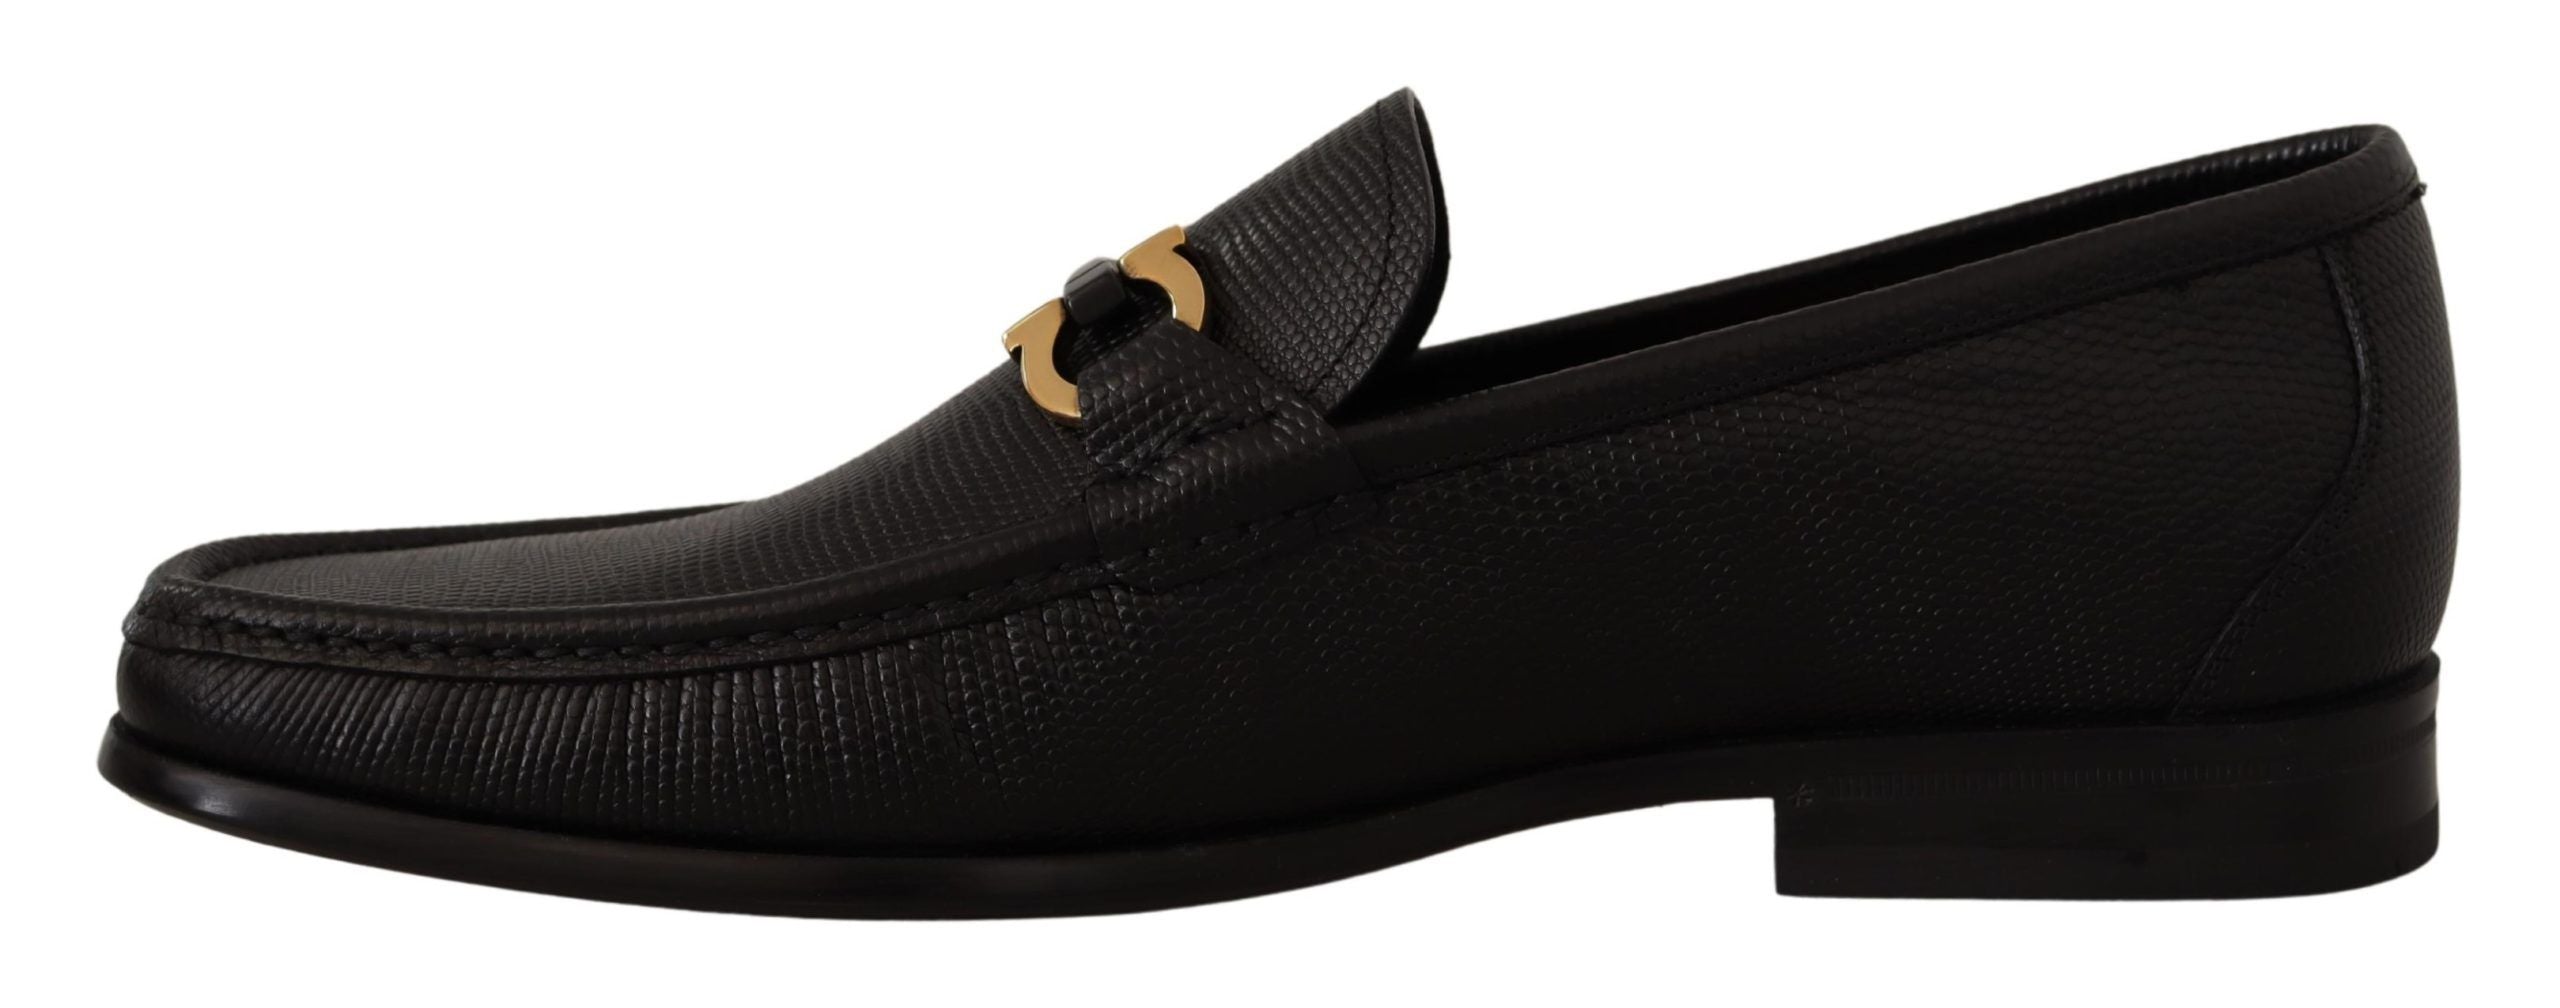 Salvatore Ferragamo Black Calf Leather Moccasins Loafers Men's Shoes